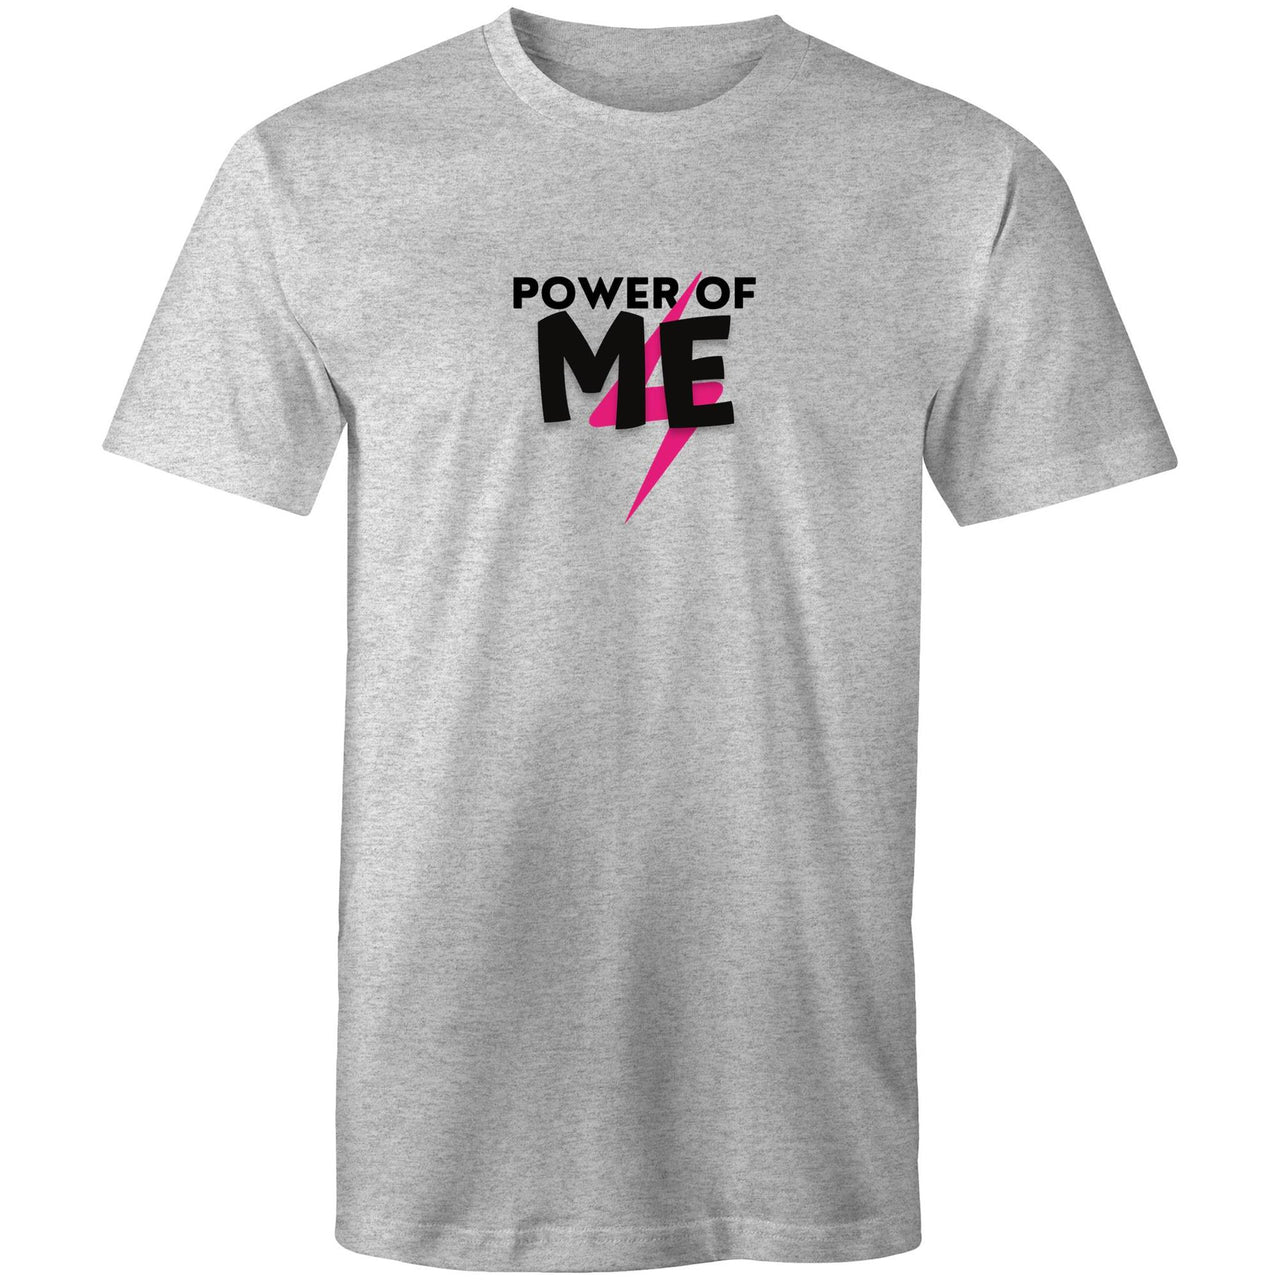 CBF Power of Me Crew T-Shirt grey marle by CBF Clothing